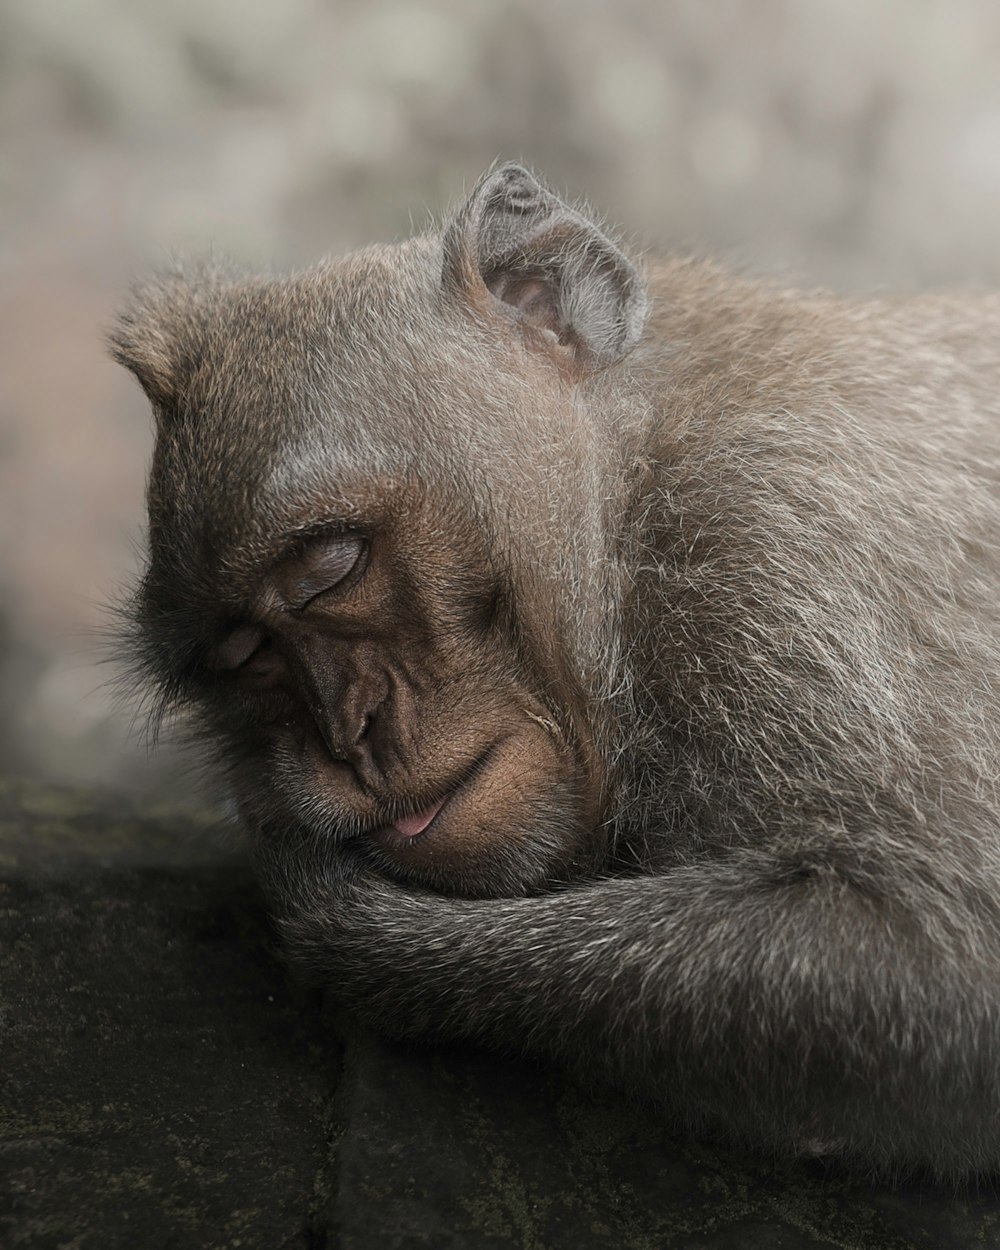 a close up of a monkey laying on a rock